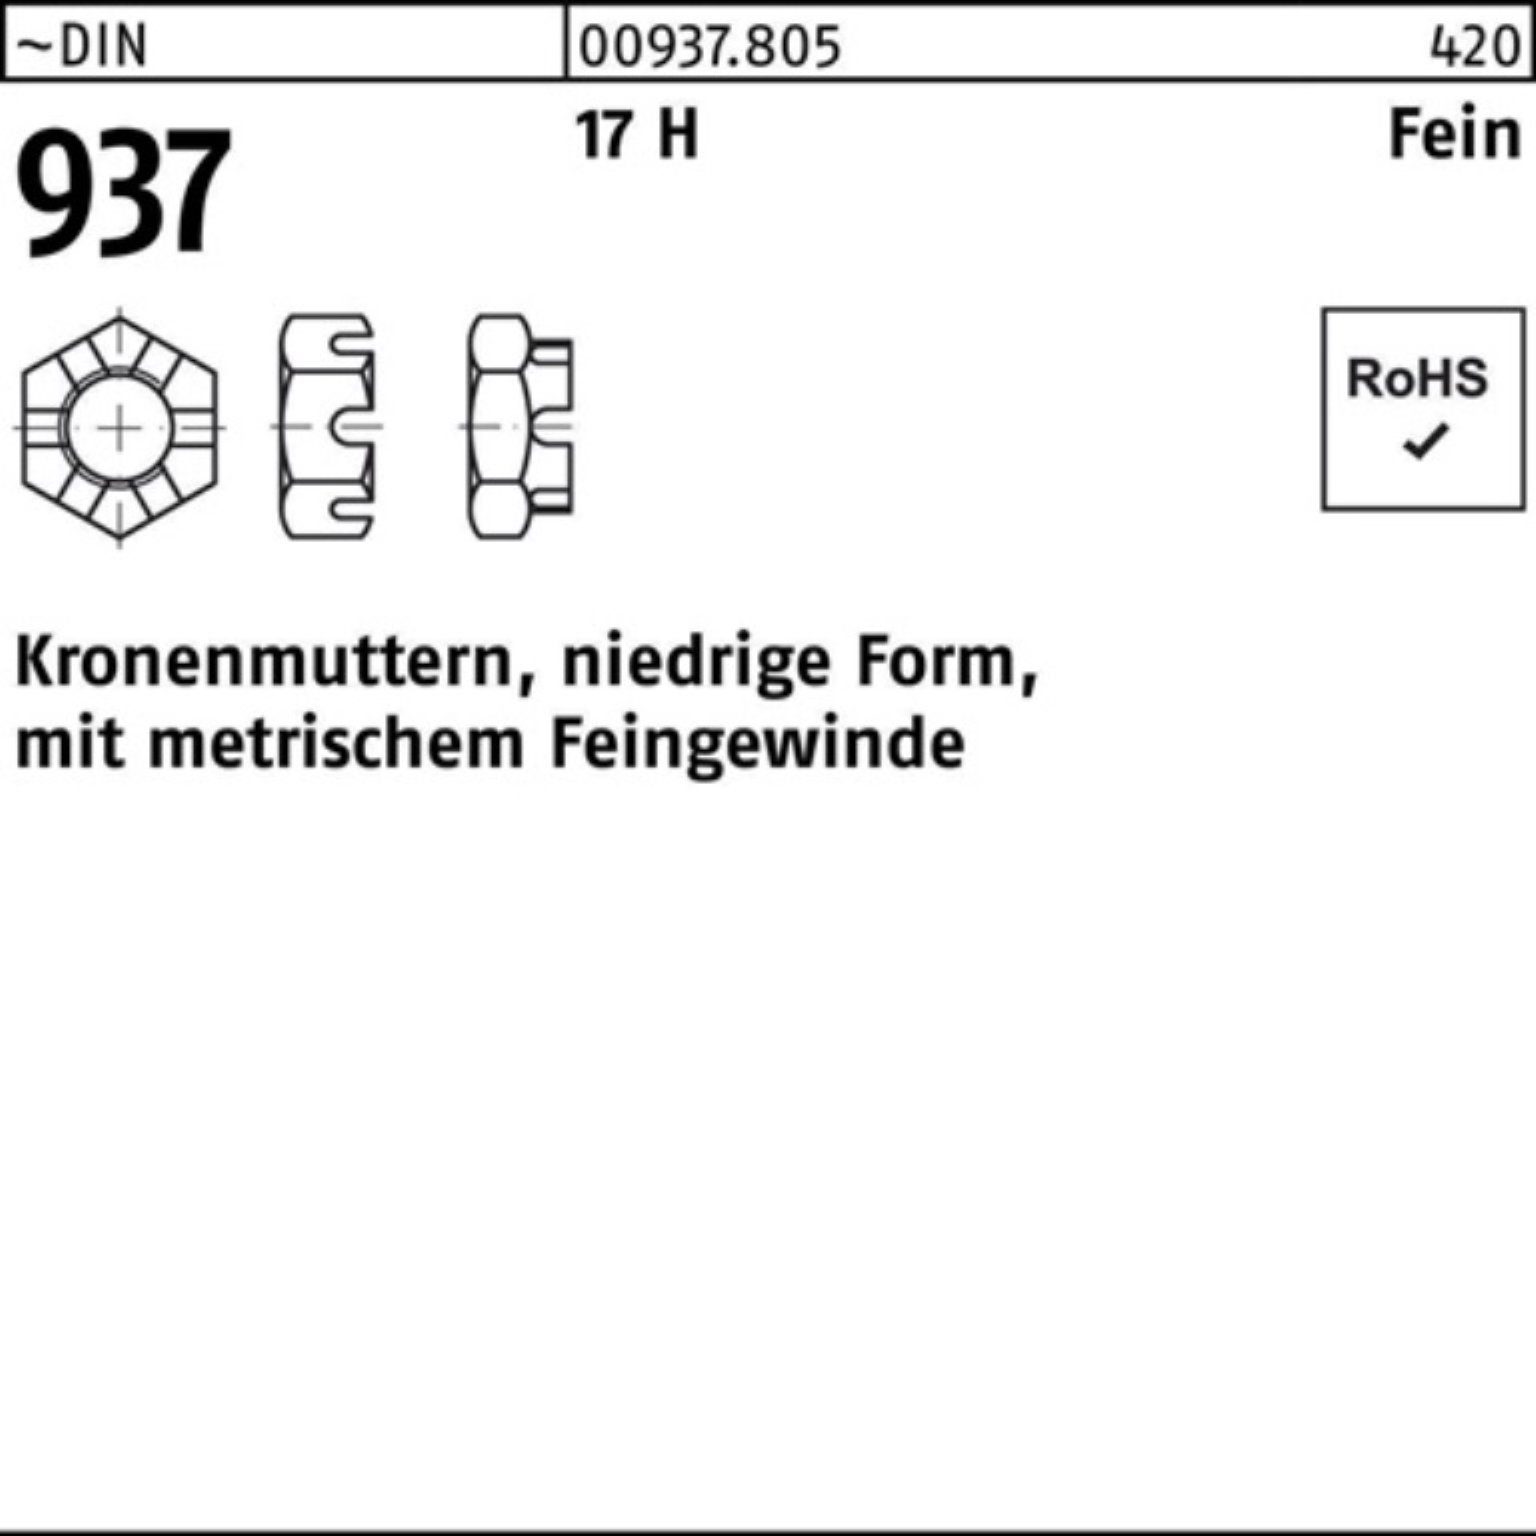 Reyher Kronenmutter 100er Pack Kronenmutter DIN 937 niedrige FormM42x 3 17 H Feingew. 1 St